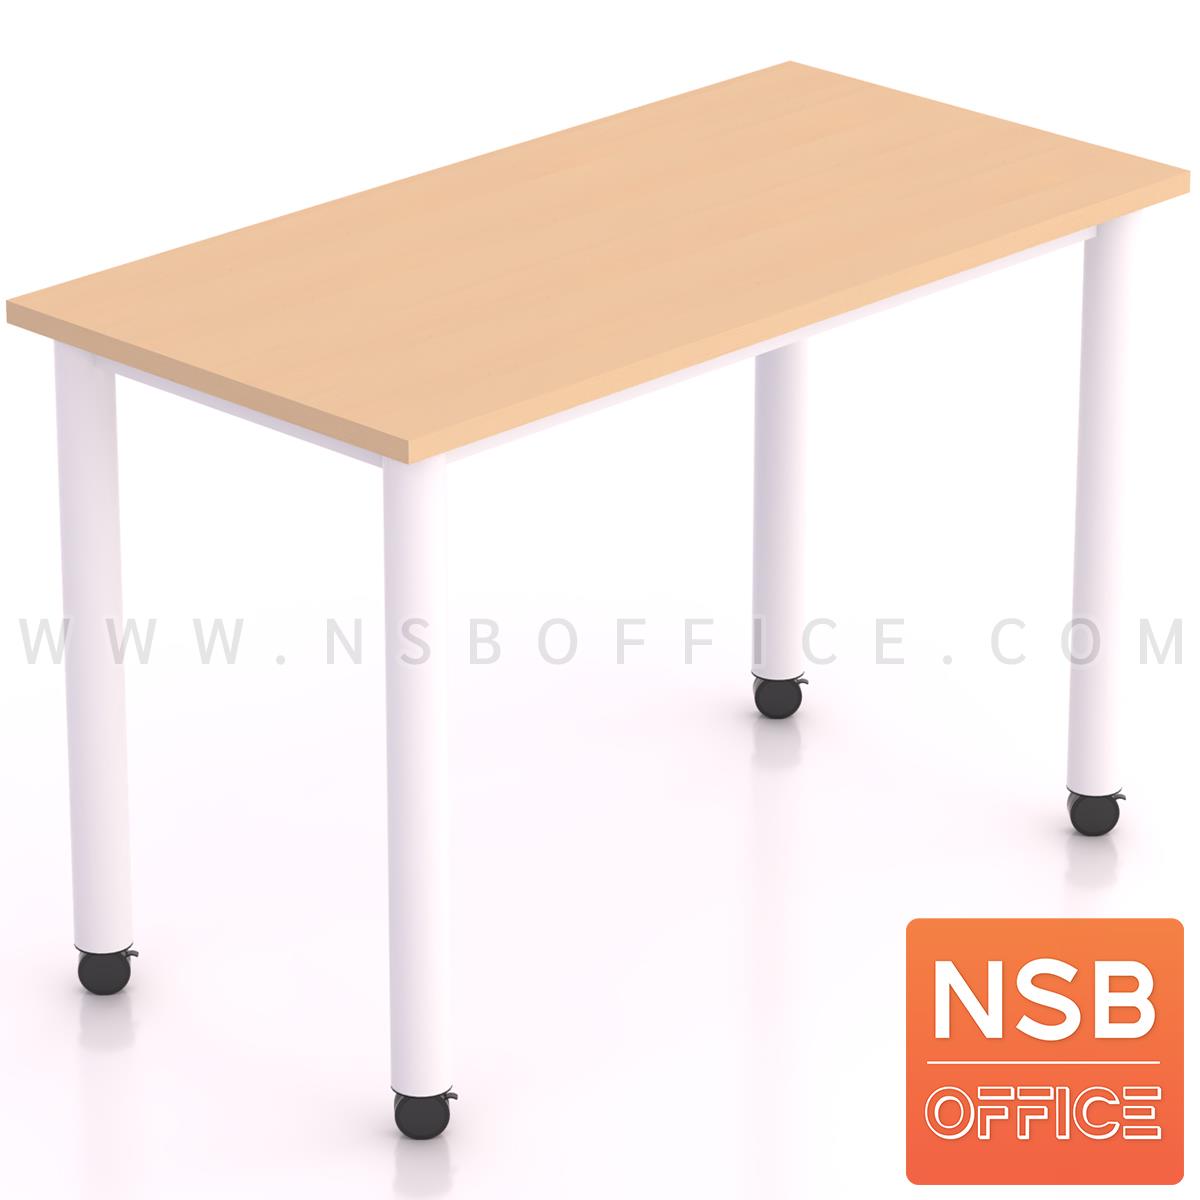 B30A063:โต๊ะทำงานทรงสี่เหลี่ยม  รุ่น Malvern (มัลเวิร์น)  โครงขากลม สีขาว